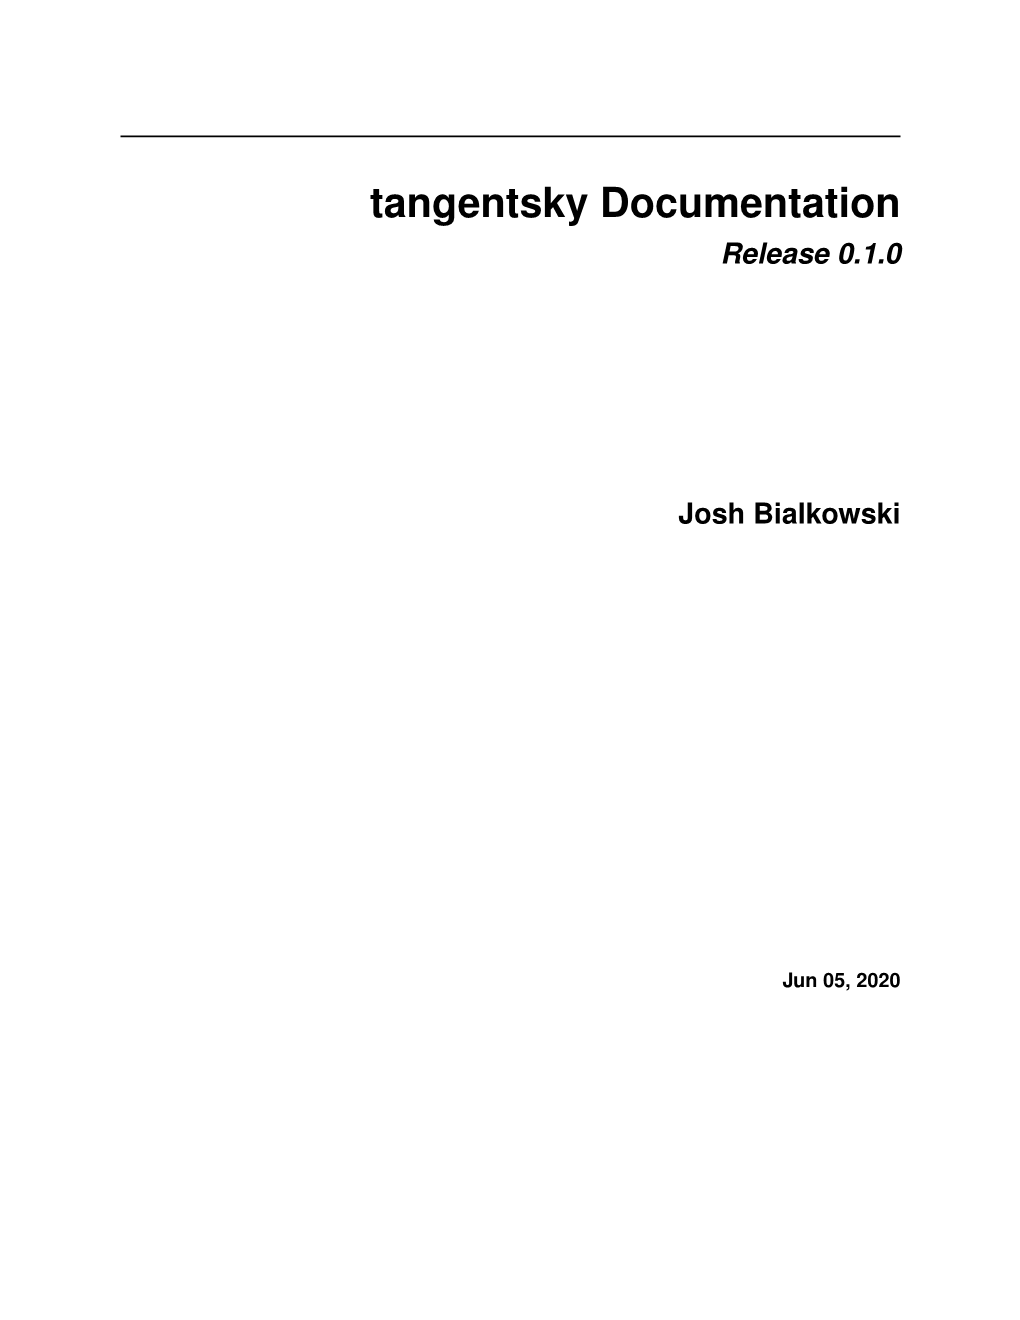 Tangentsky Documentation Release 0.1.0